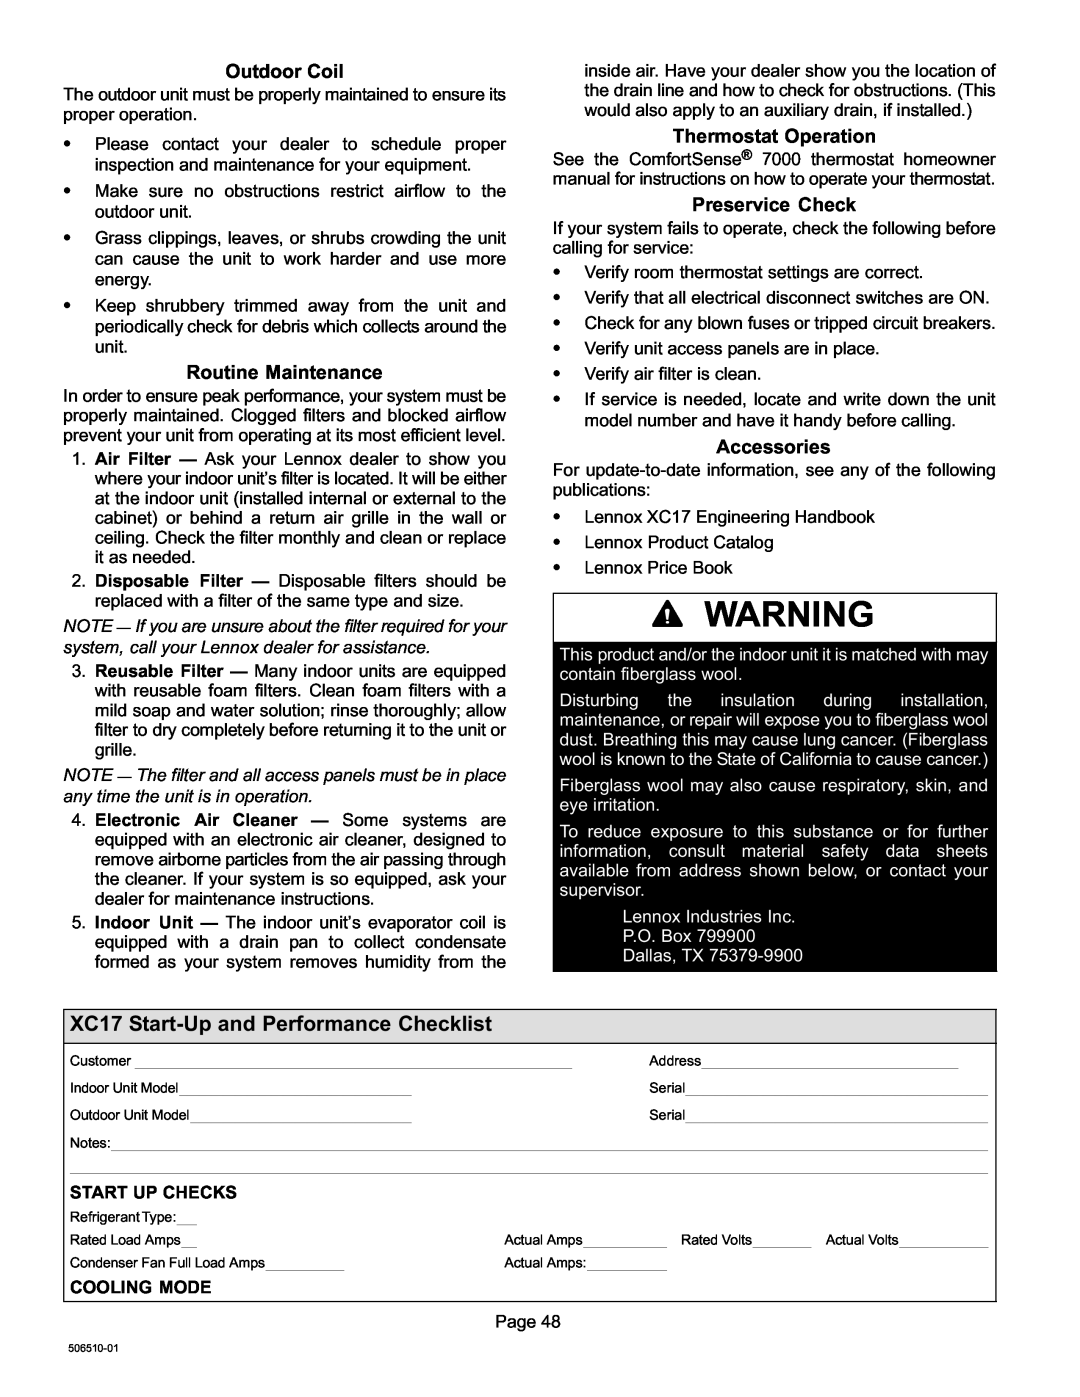 Lennox International Inc 506510-01 XC17 Start−Up and Performance Checklist, Routine Maintenance, Thermostat Operation 